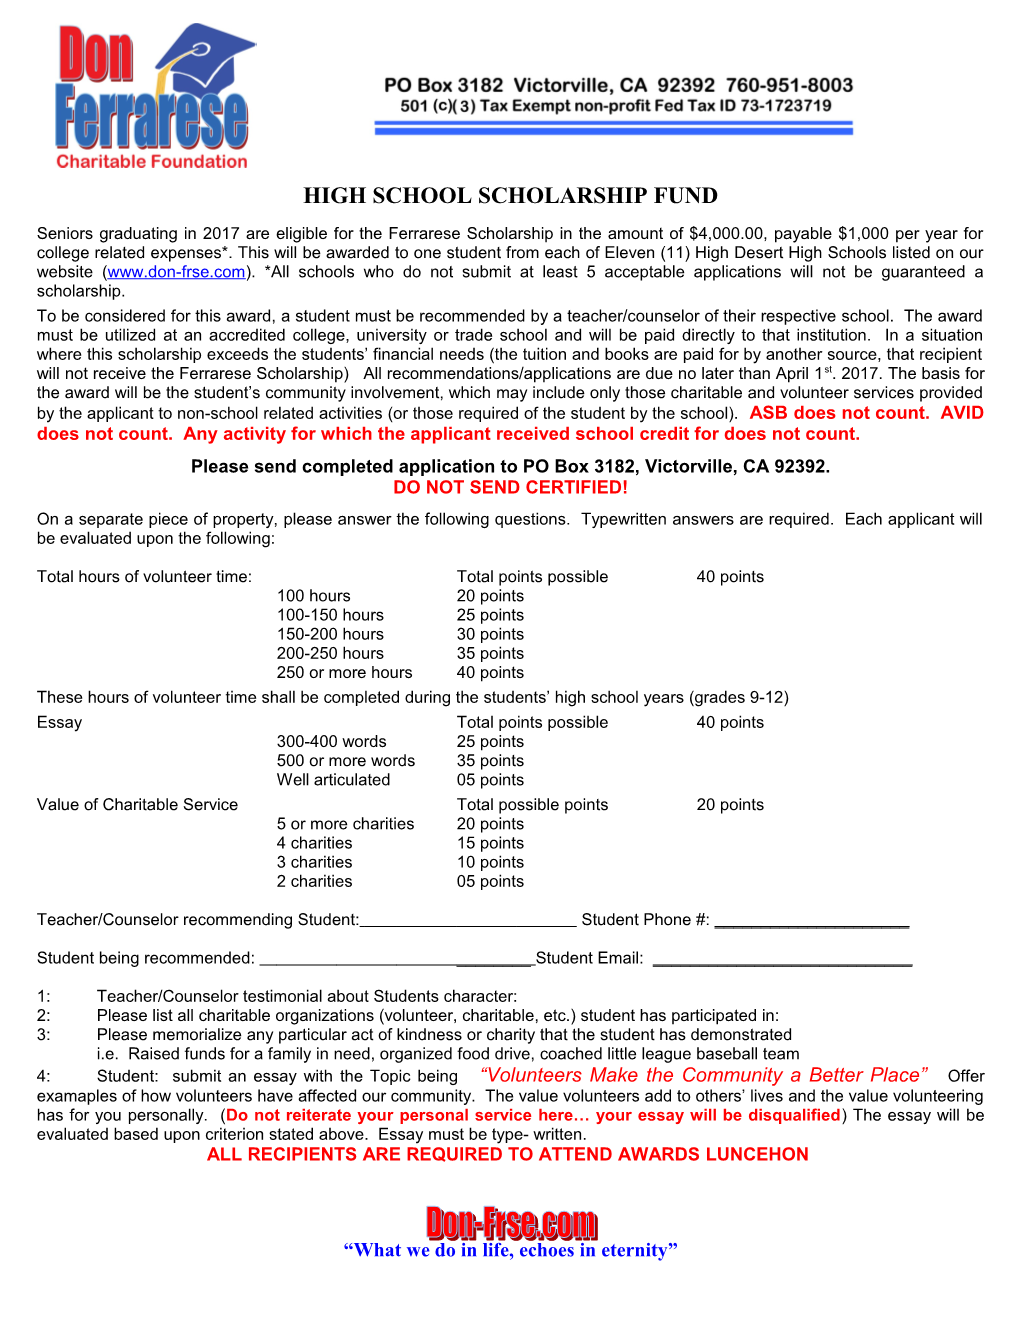 High School Scholarship Fund